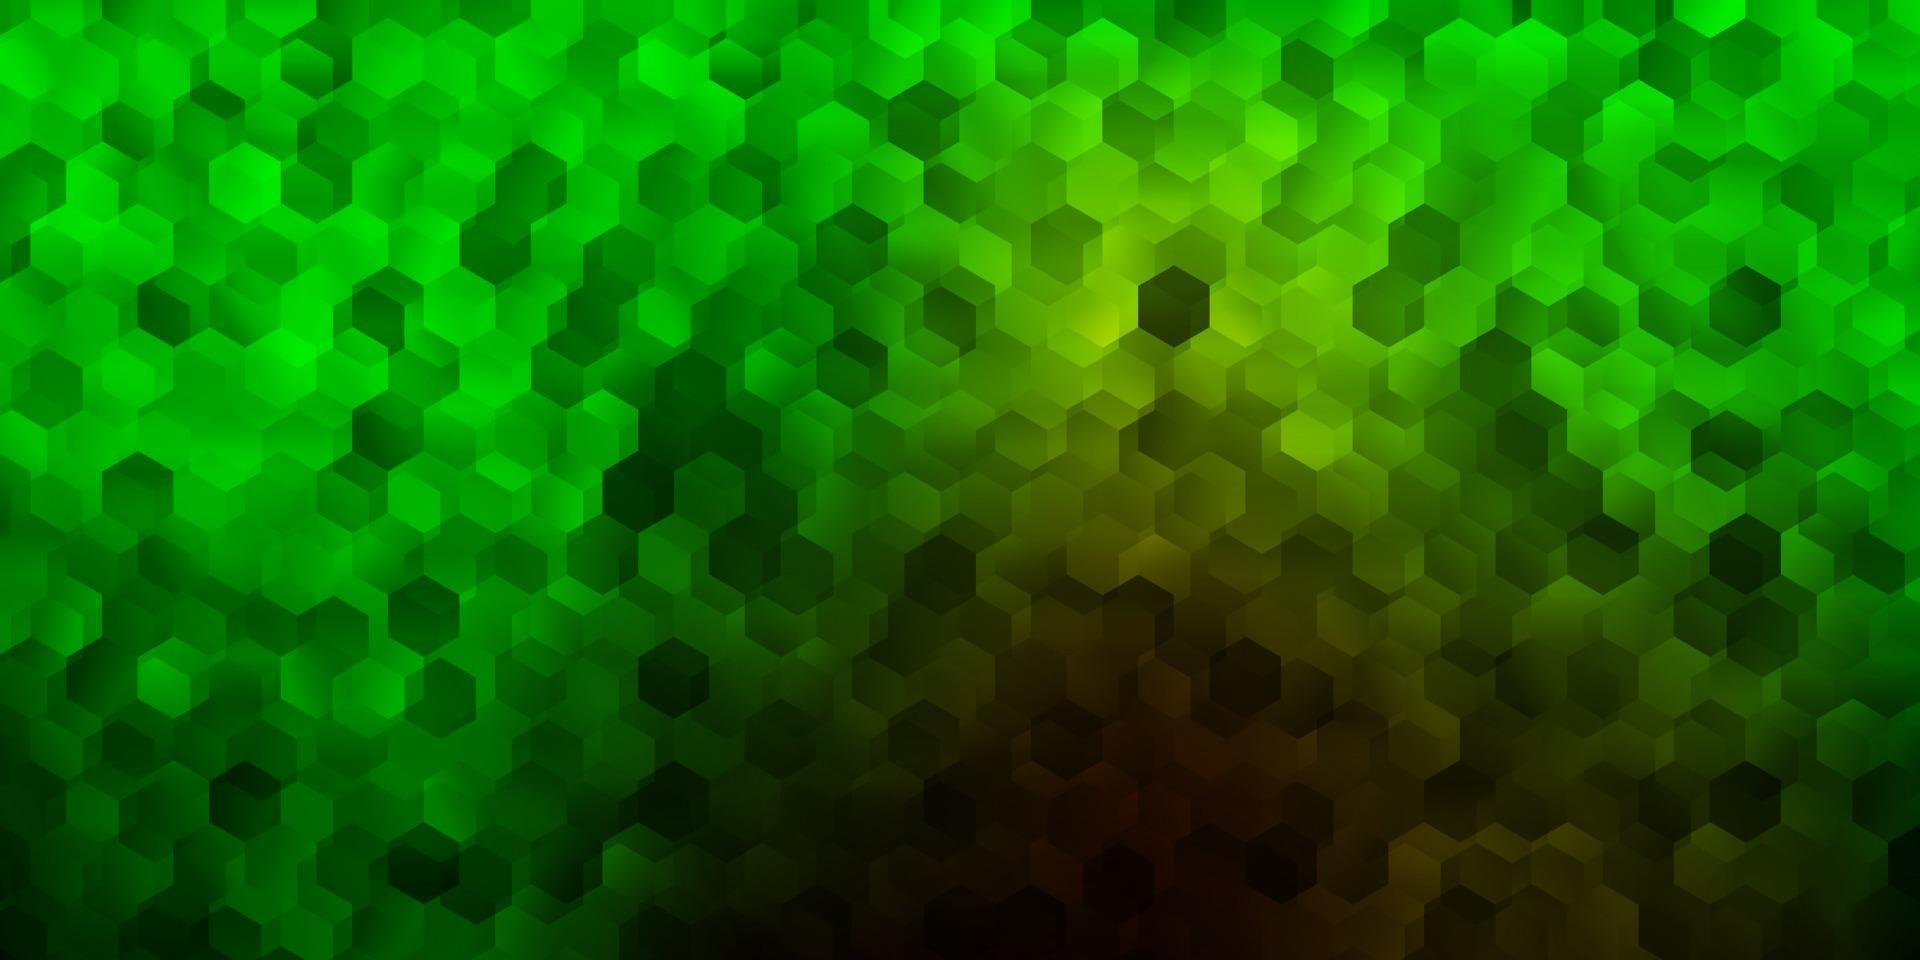 patrón de vector verde oscuro con hexágonos.